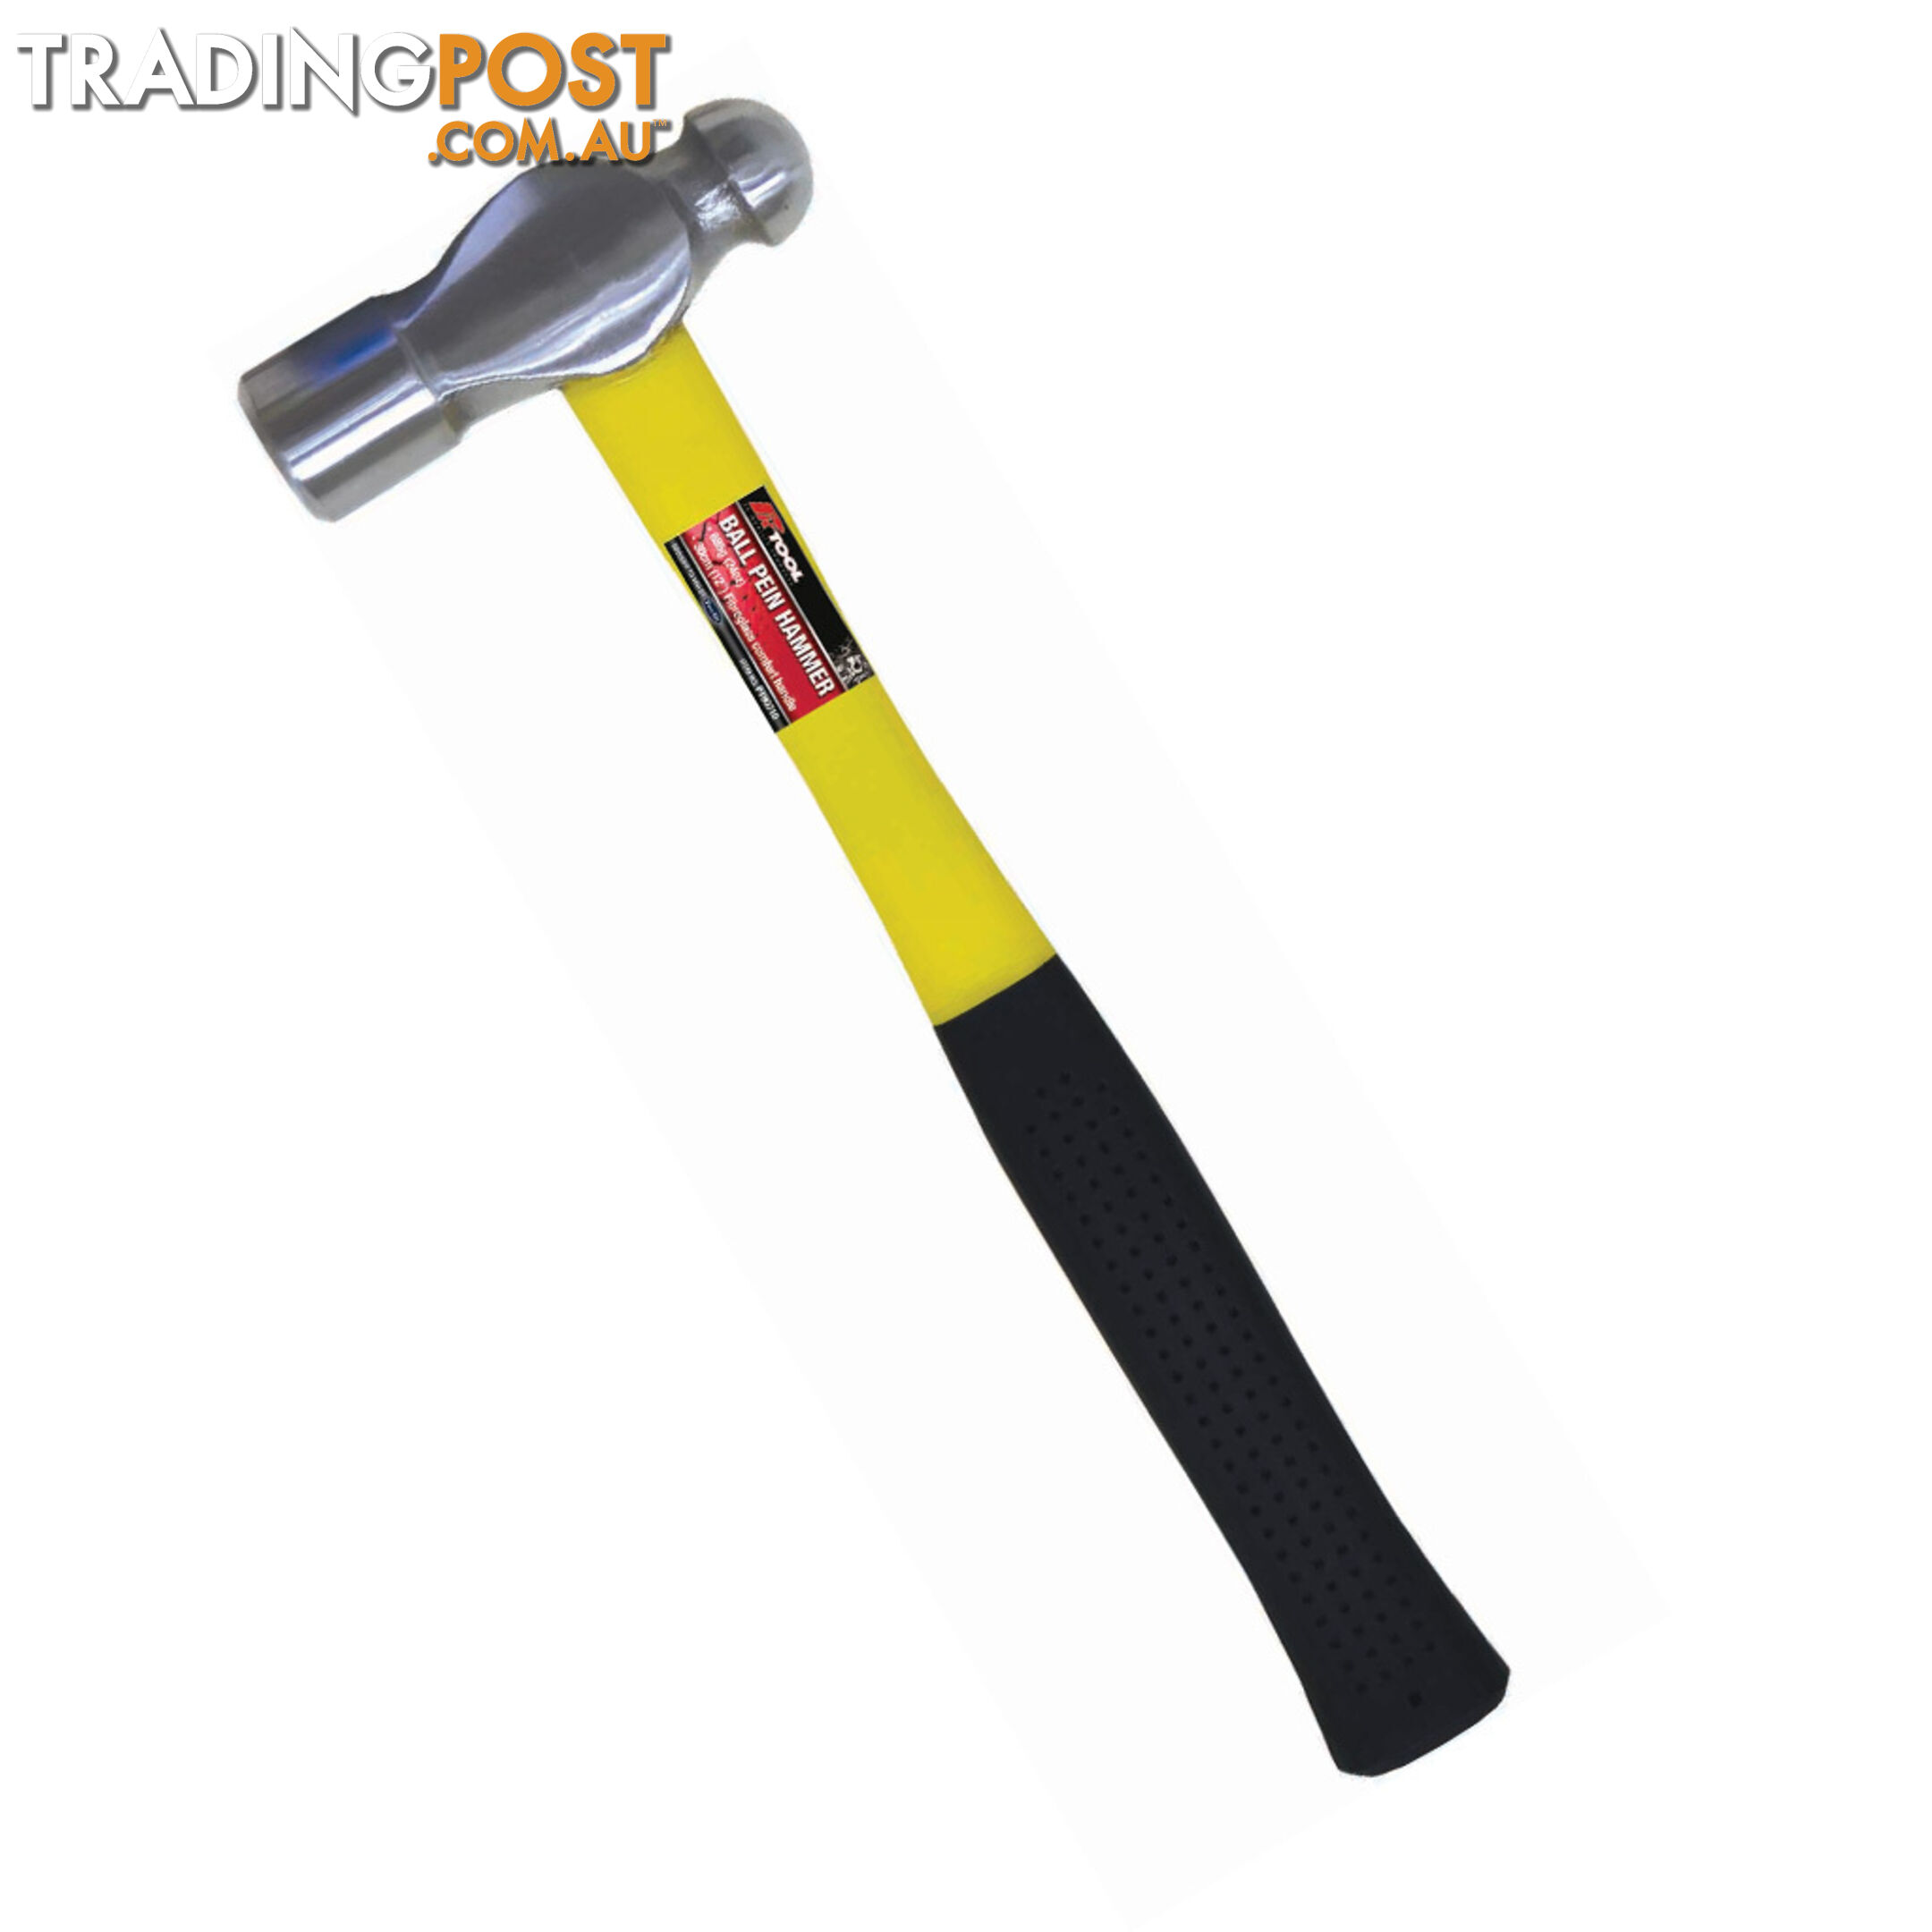 PK Tool Ball Pein Hammer 685gr (240oz) 30cm (12 ") Fibreglass Handle SKU - PT90710